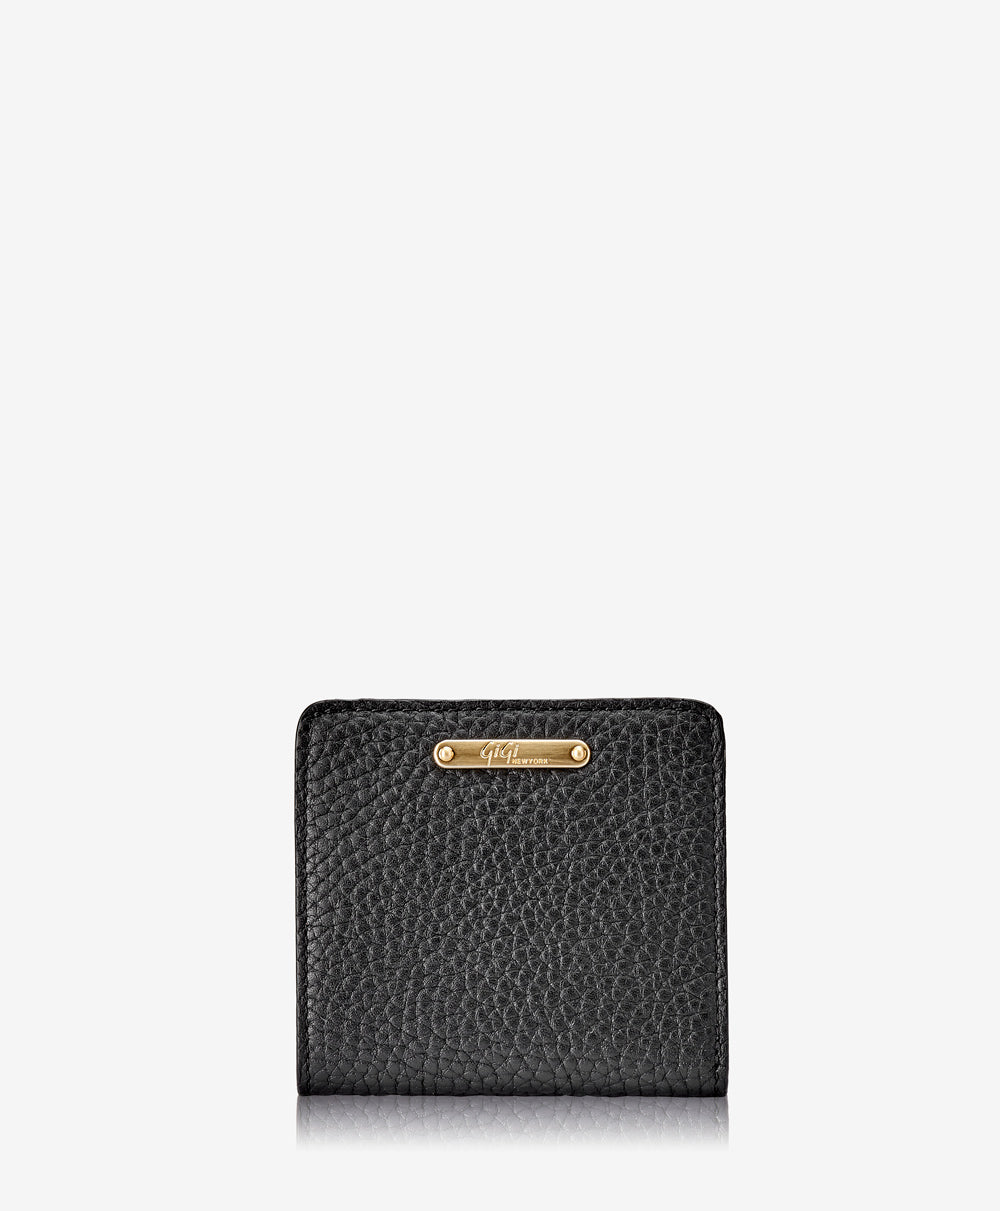 GiGi New York Mini Foldover Wallet Black Pebble Grain Leather